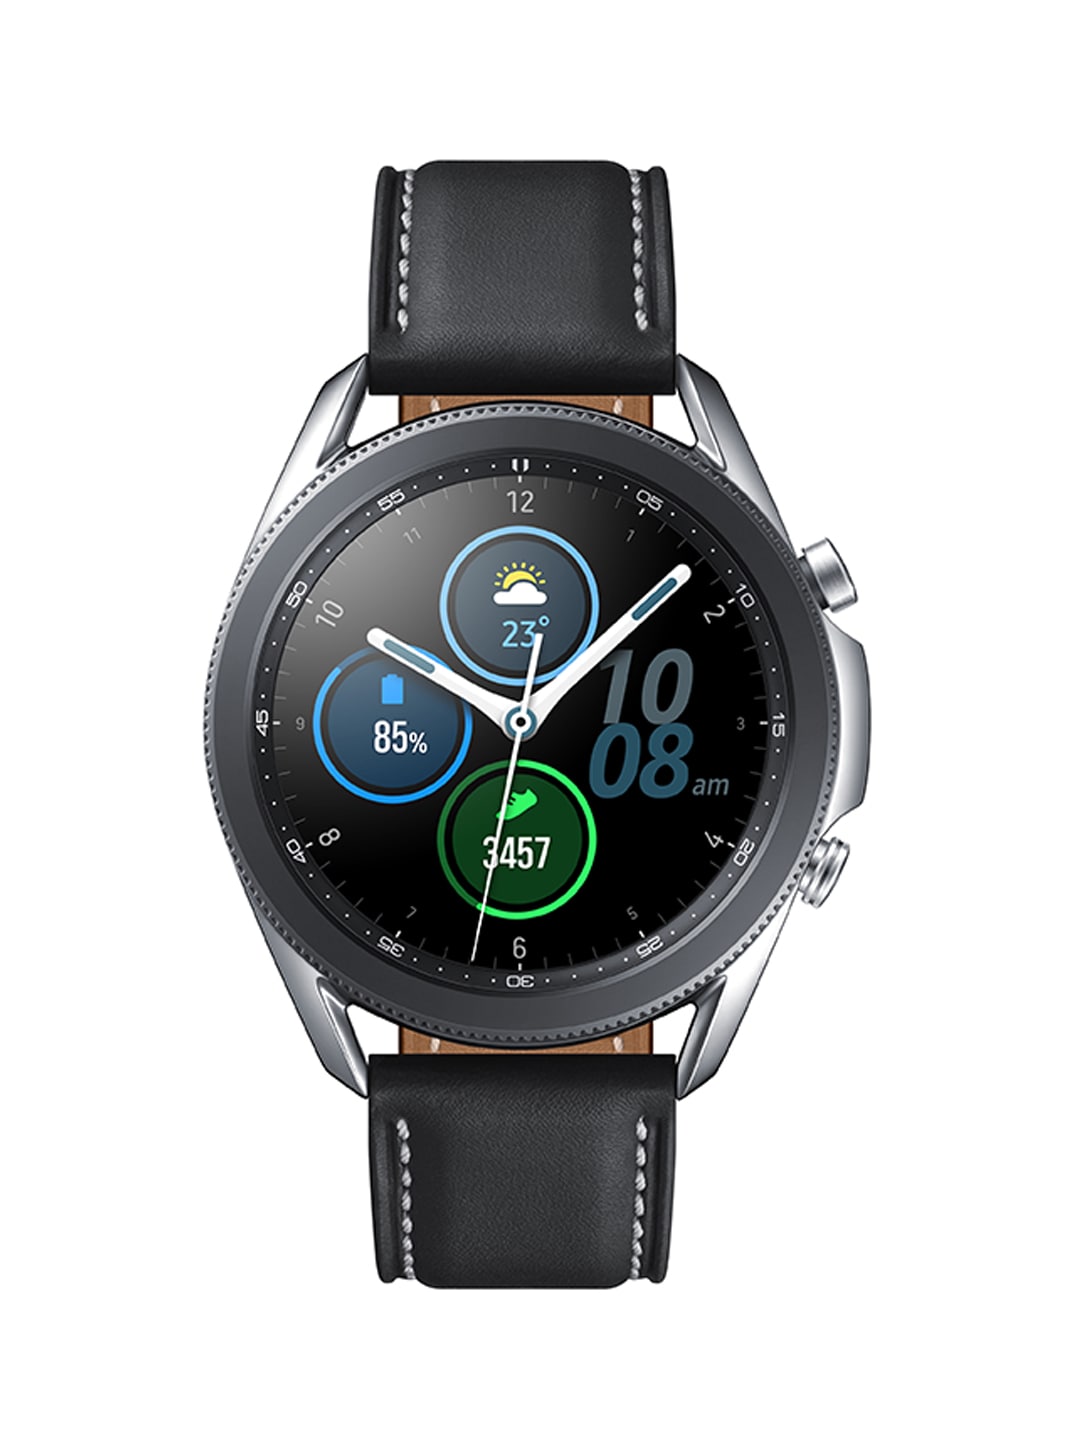 Samsung Galaxy Watch3 Bluetooth Smart Watch - Mystic Silver Price in India